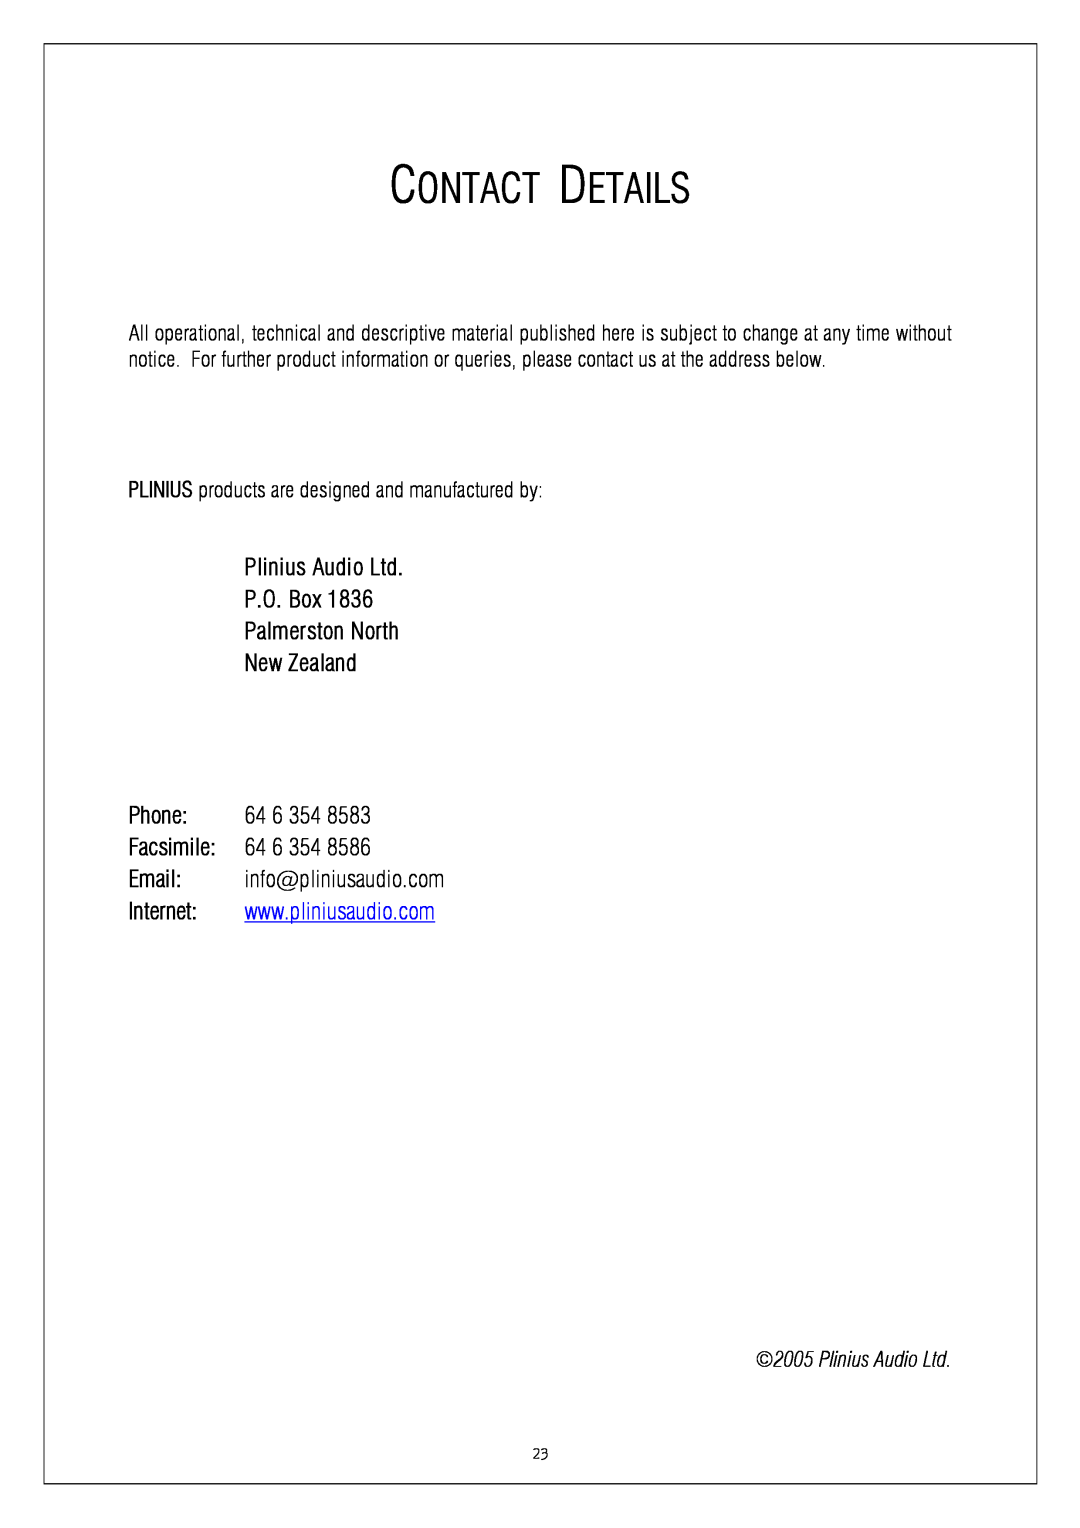 Plinius Audio SA-103 manual Contact Details, New Zealand, Phone 64 6 354 Facsimile 